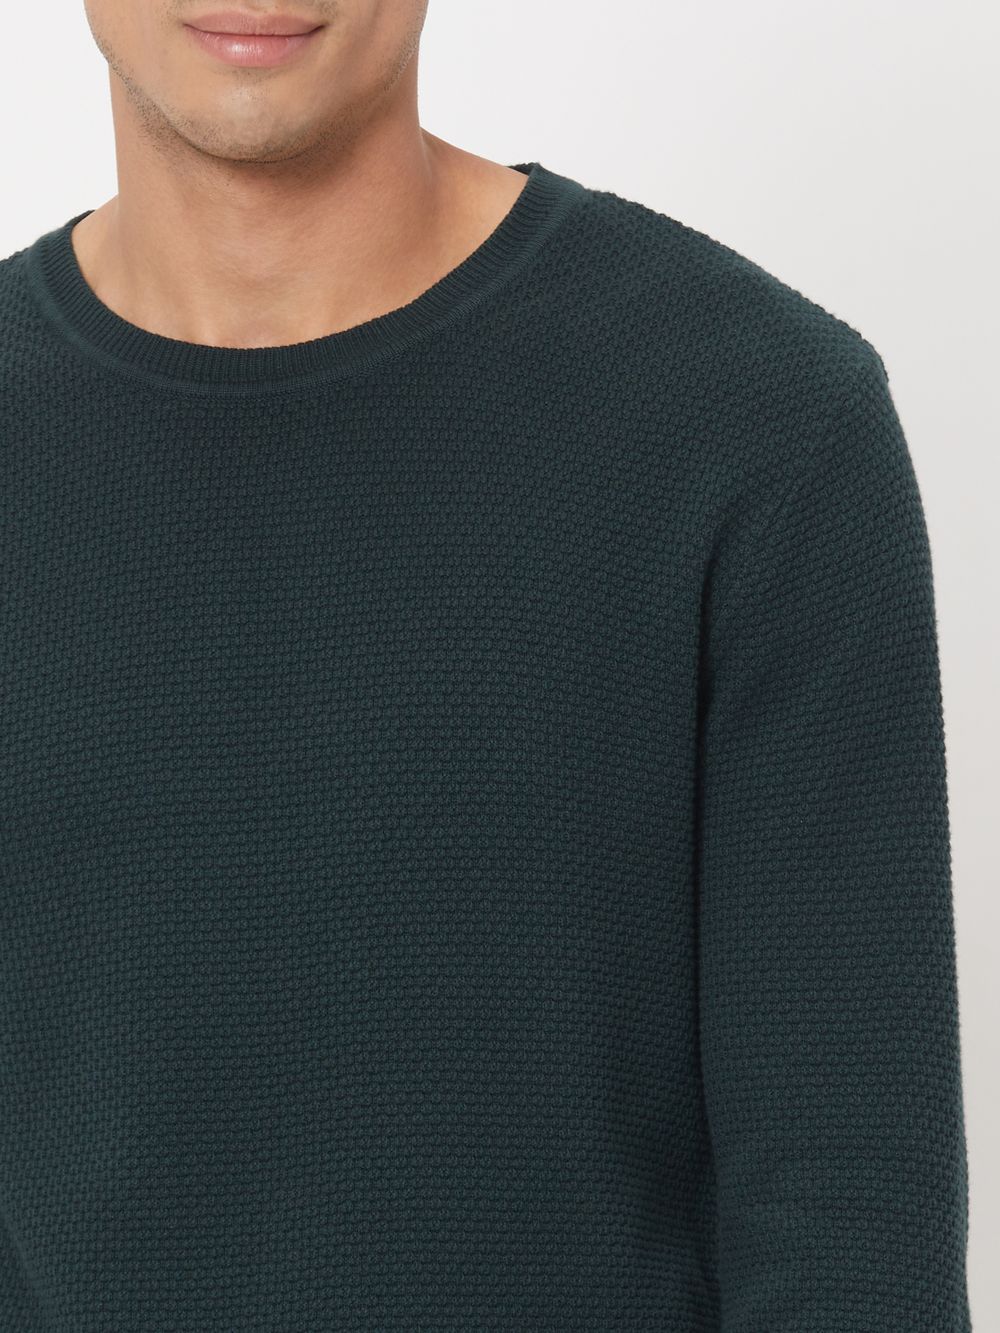 Green Textured Slim Fit Sweater